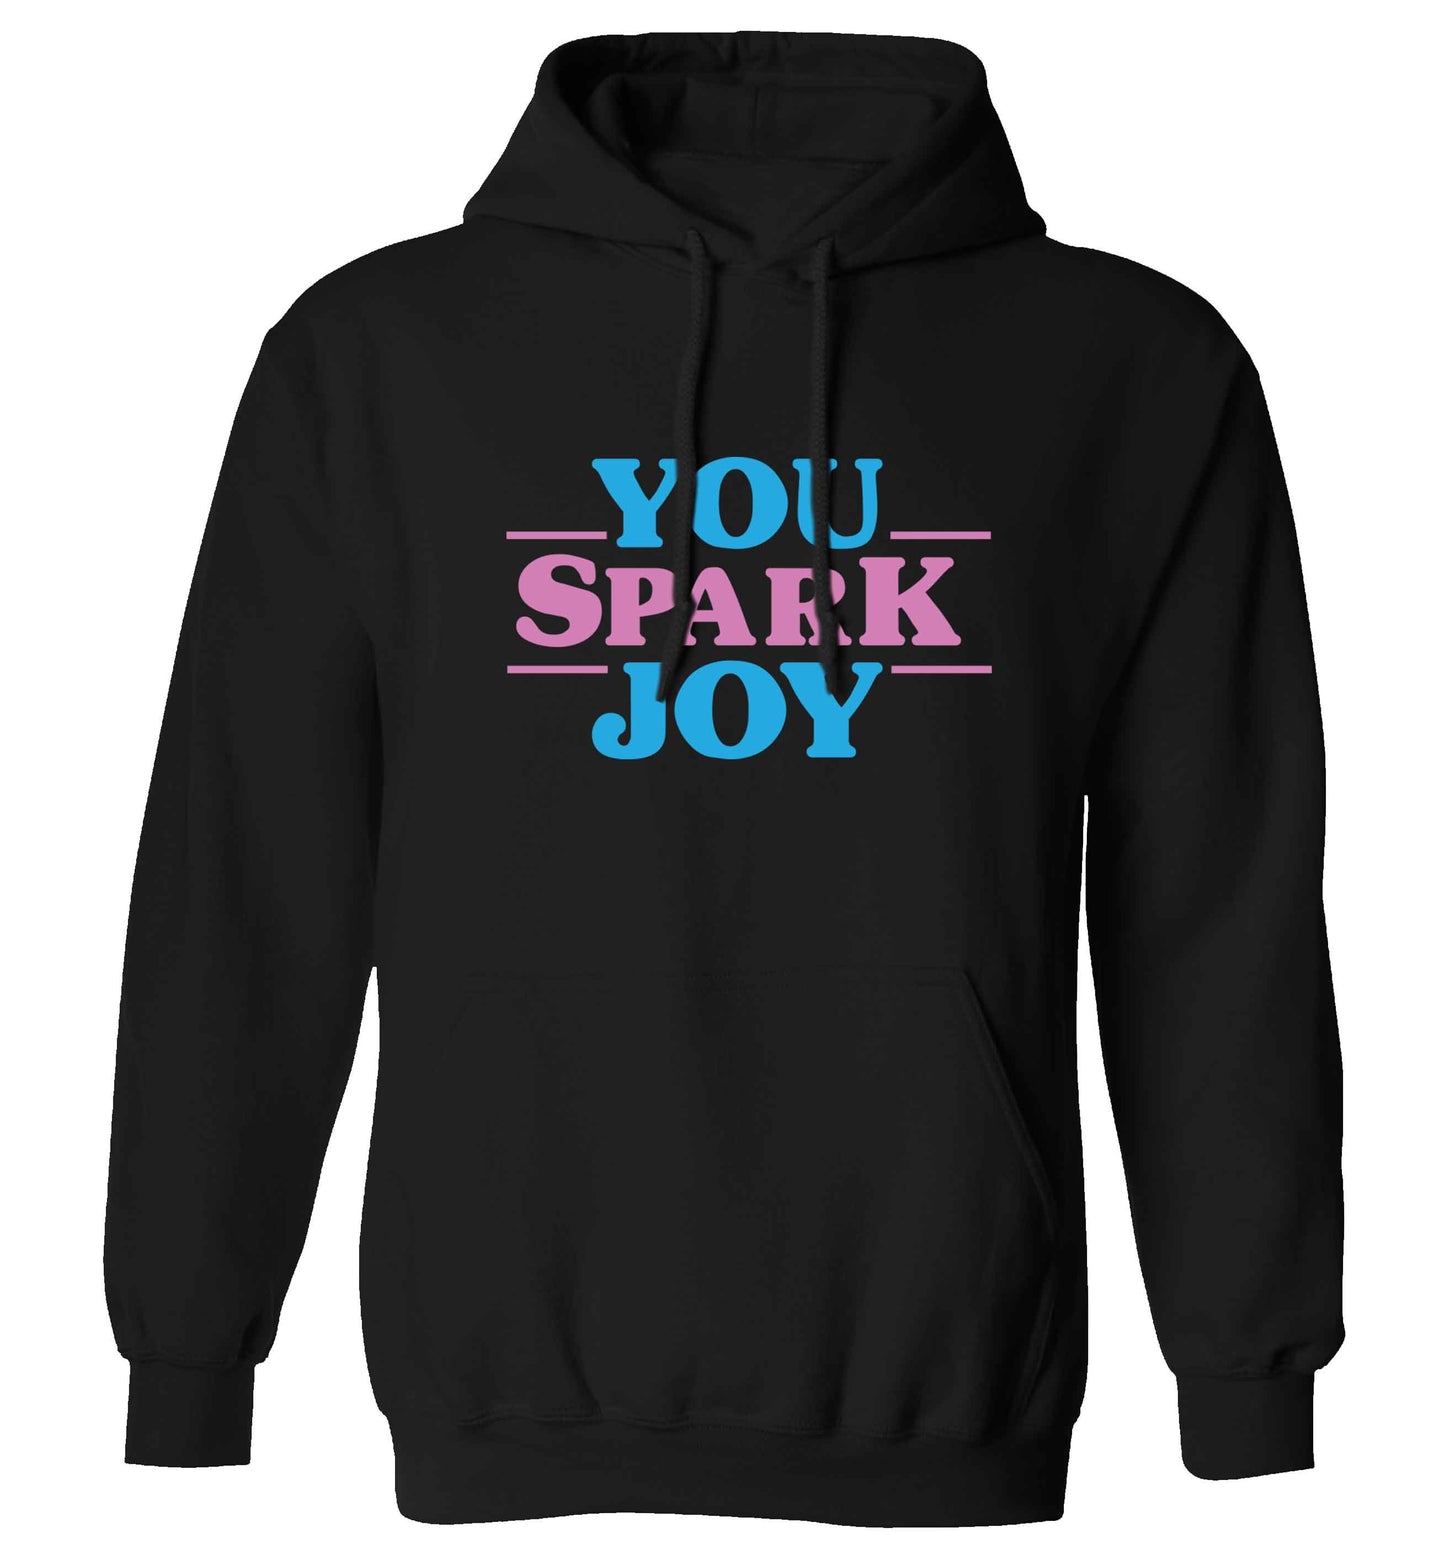 You spark joy adults unisex black hoodie 2XL